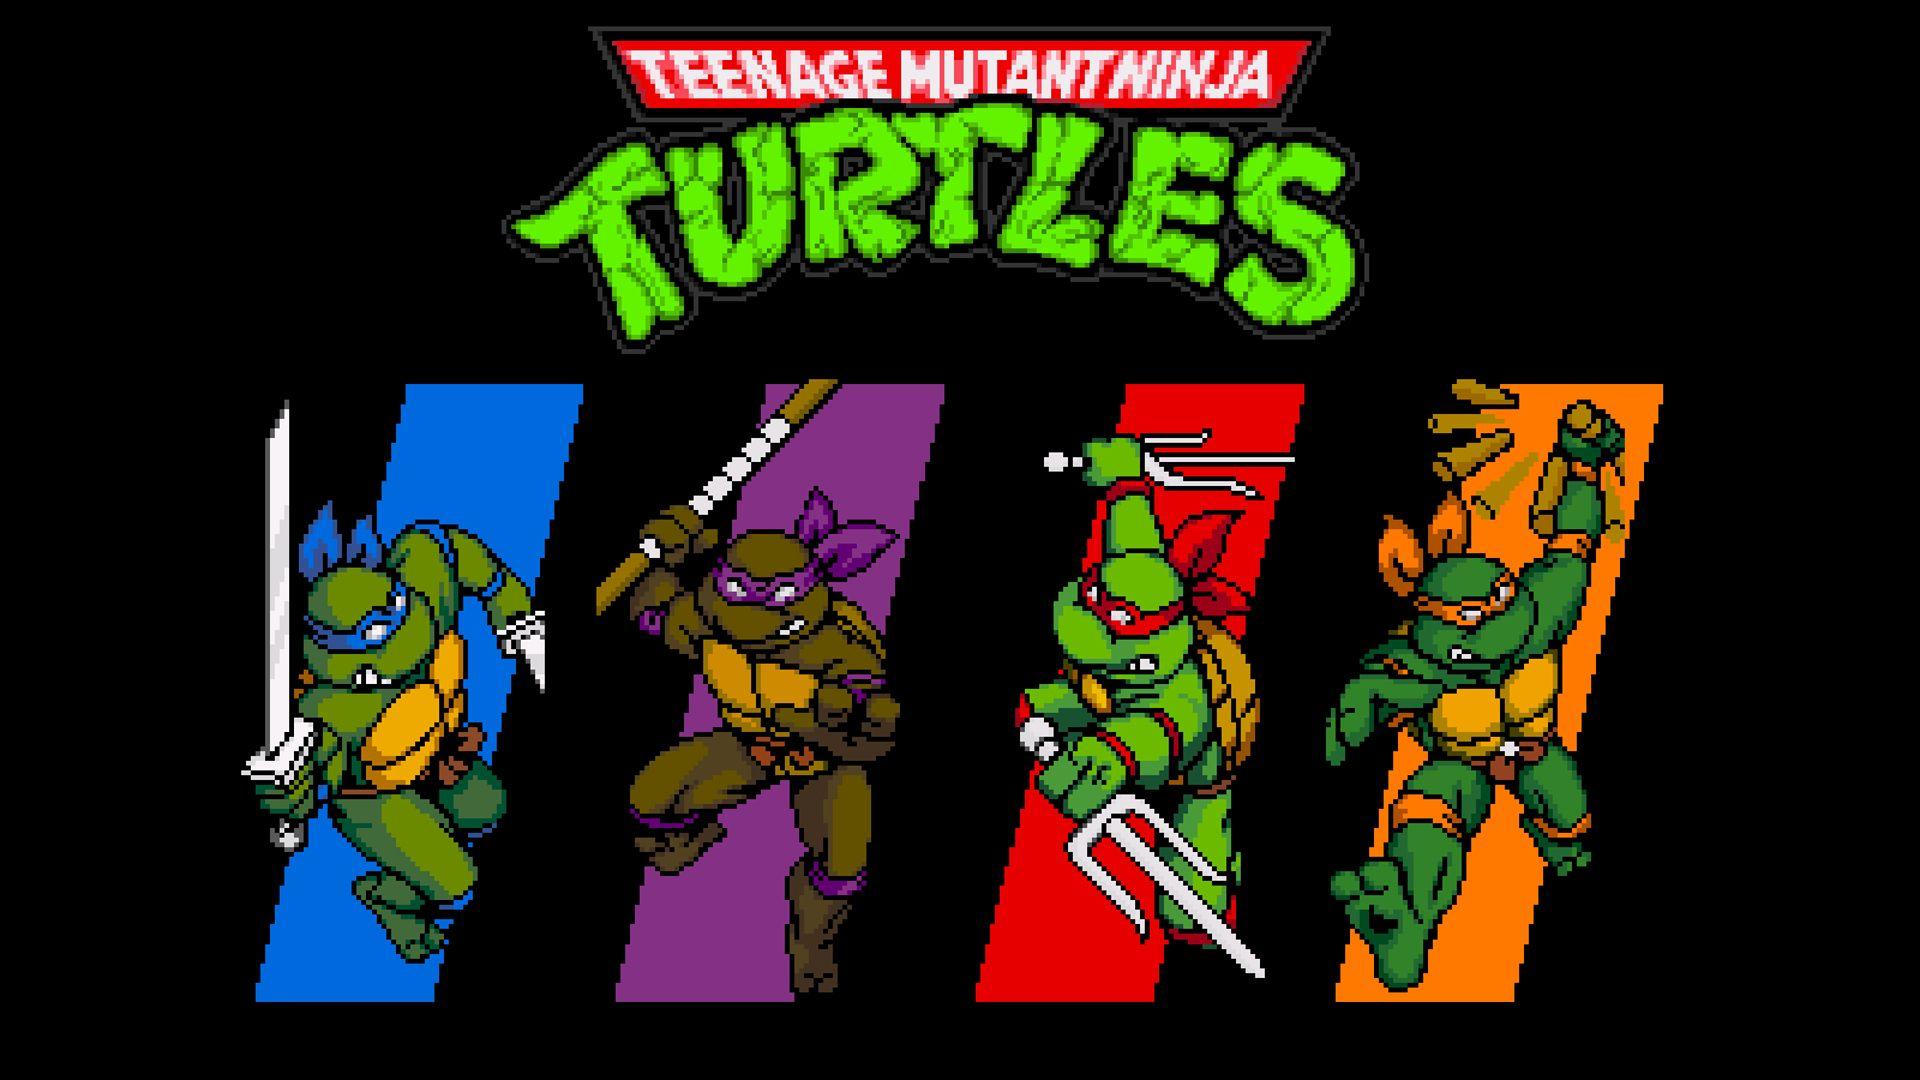 ninja turtles games